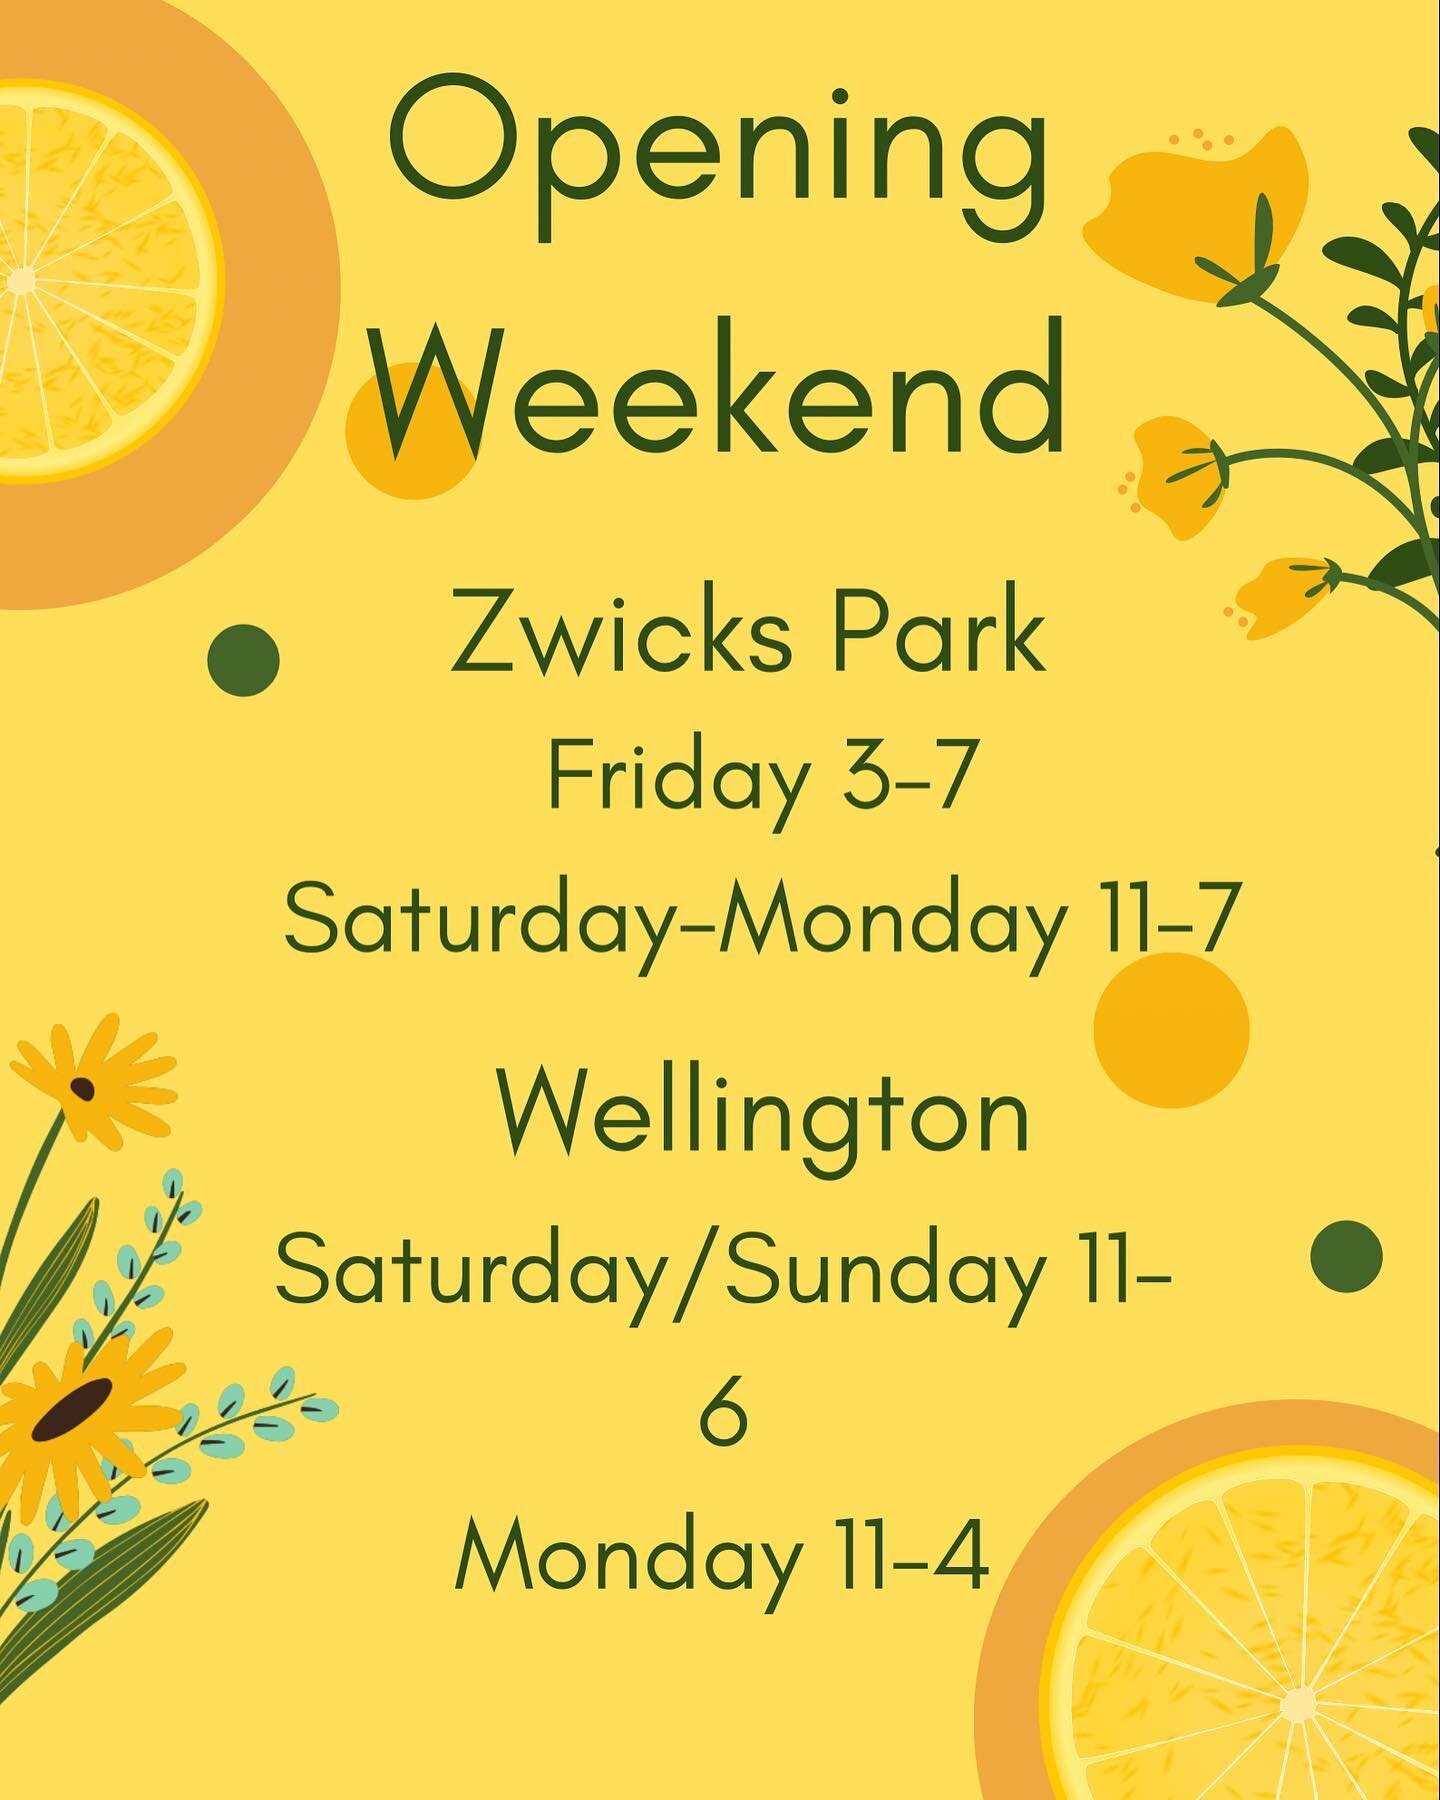 We are open for the season 🍋💛

Join us this weekend for freshly squeezed lemonades, Italian Sodas and more! 

#pec #freshlysqueezedlemonade #zwicksparkbelleville